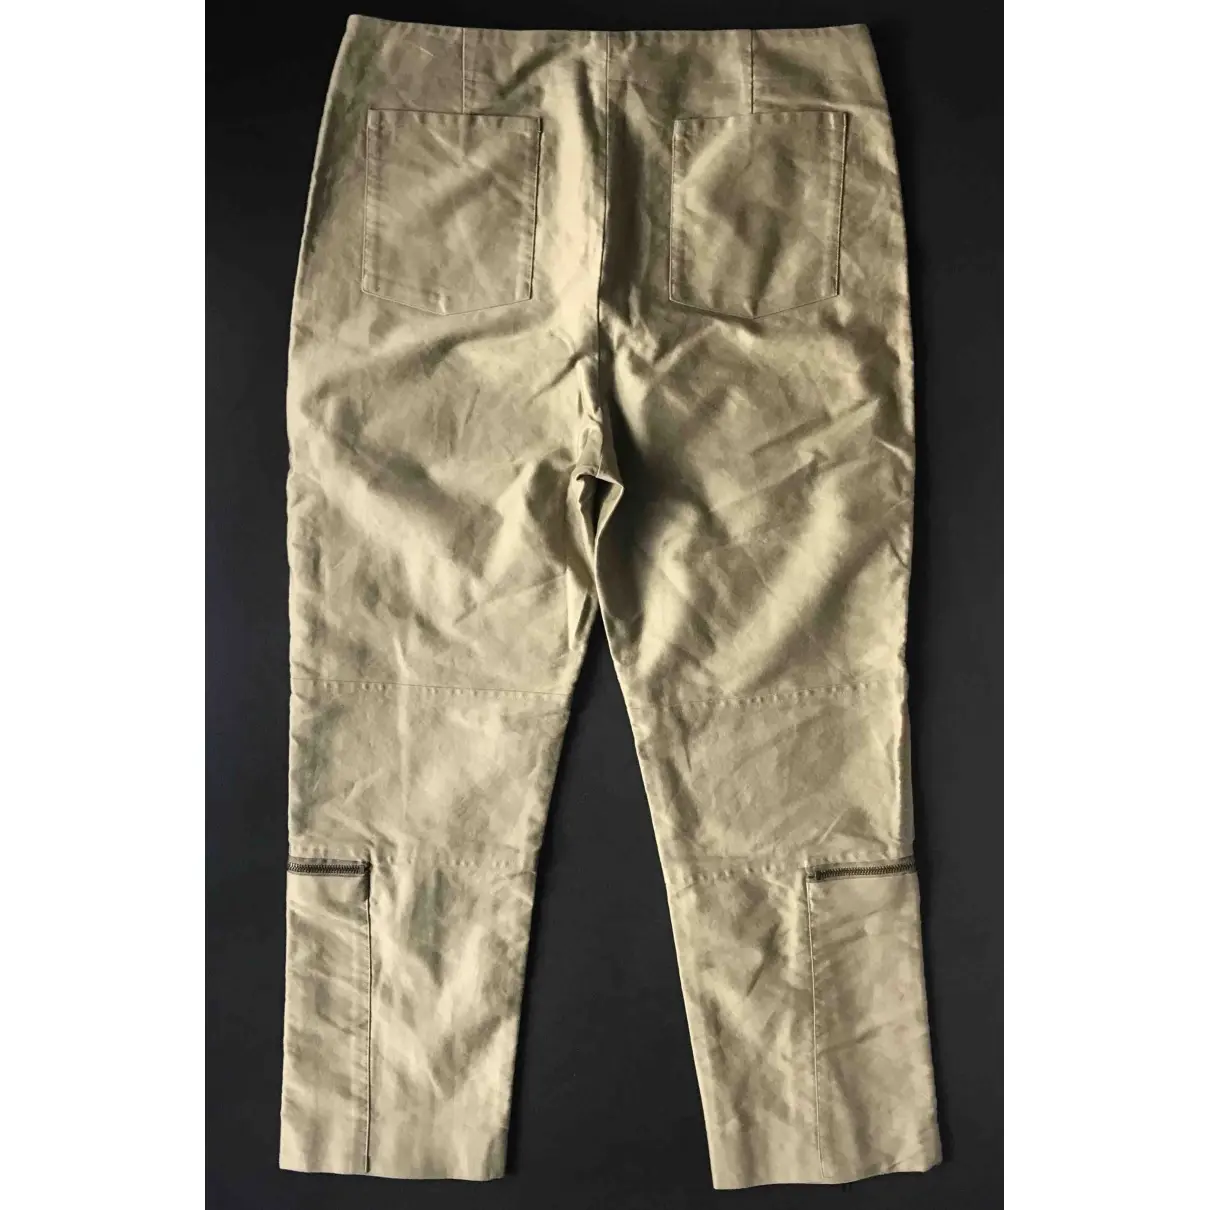 Stella McCartney Chino pants for sale